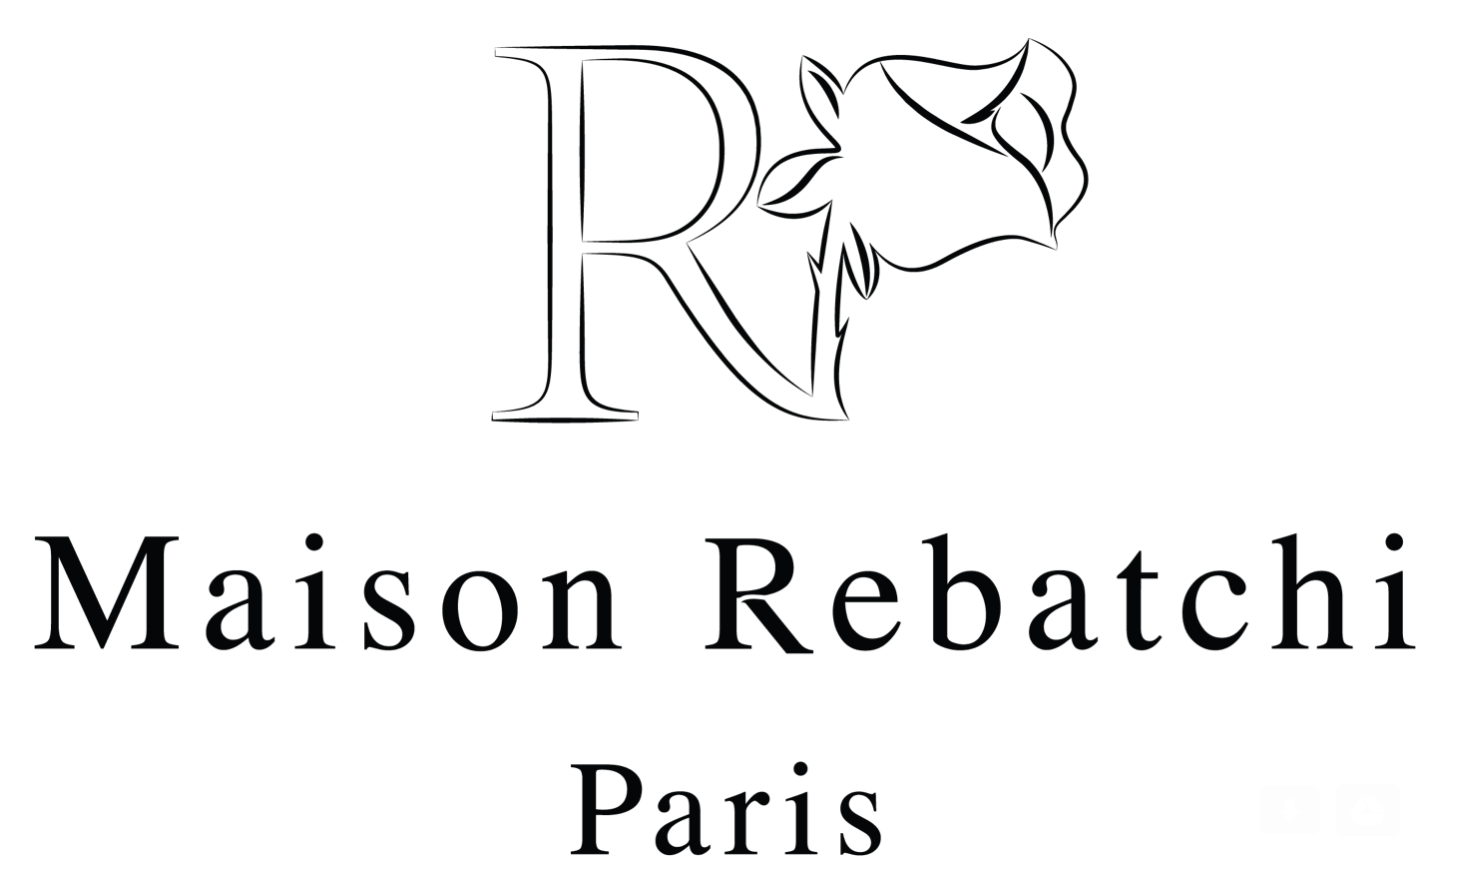 Maison Rebatchi perfumes and colognes